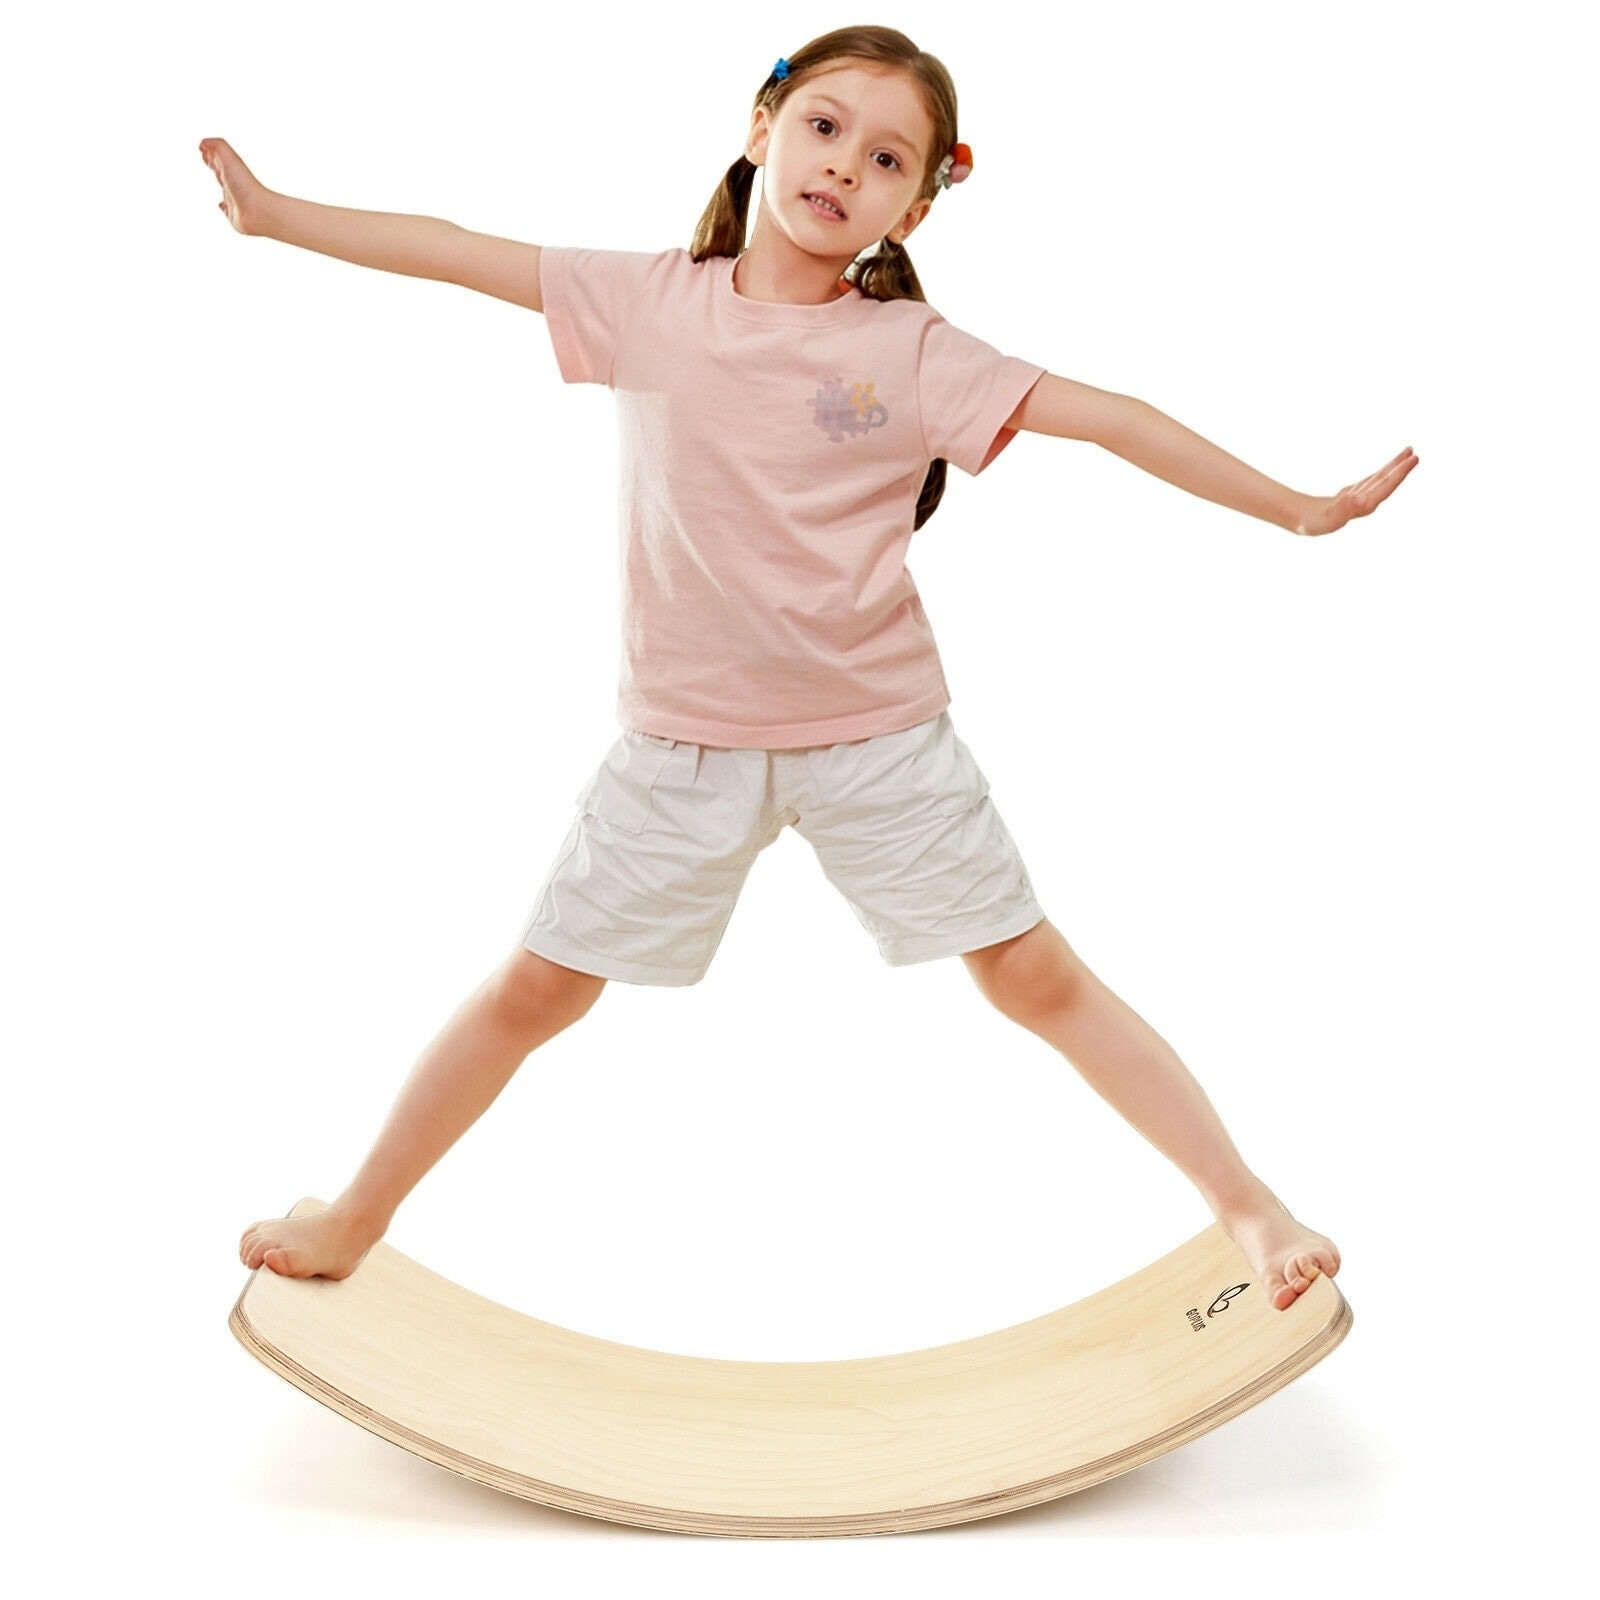 APP Curved Balance Board Kids Wobble Balance Board Natural Beech Wood with Anti-Slip Back for Body Balance Training 